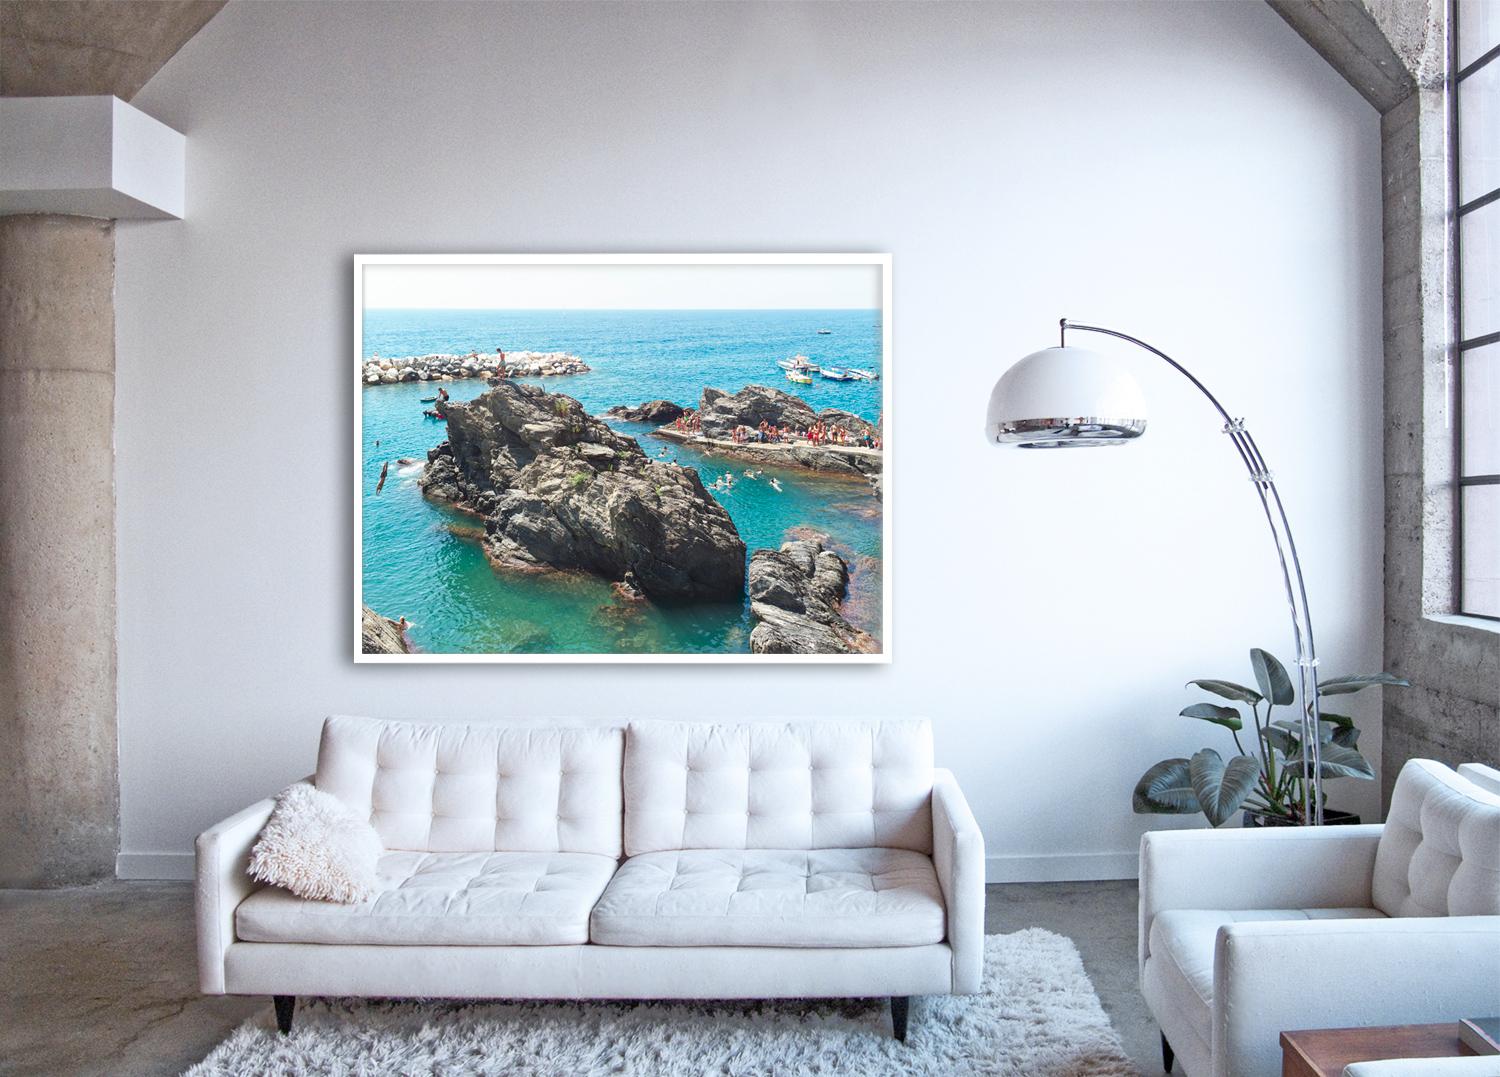 Manarola Multi Jump (framed) large scale photograph of Mediterranean beach scene - Photograph by Massimo Vitali